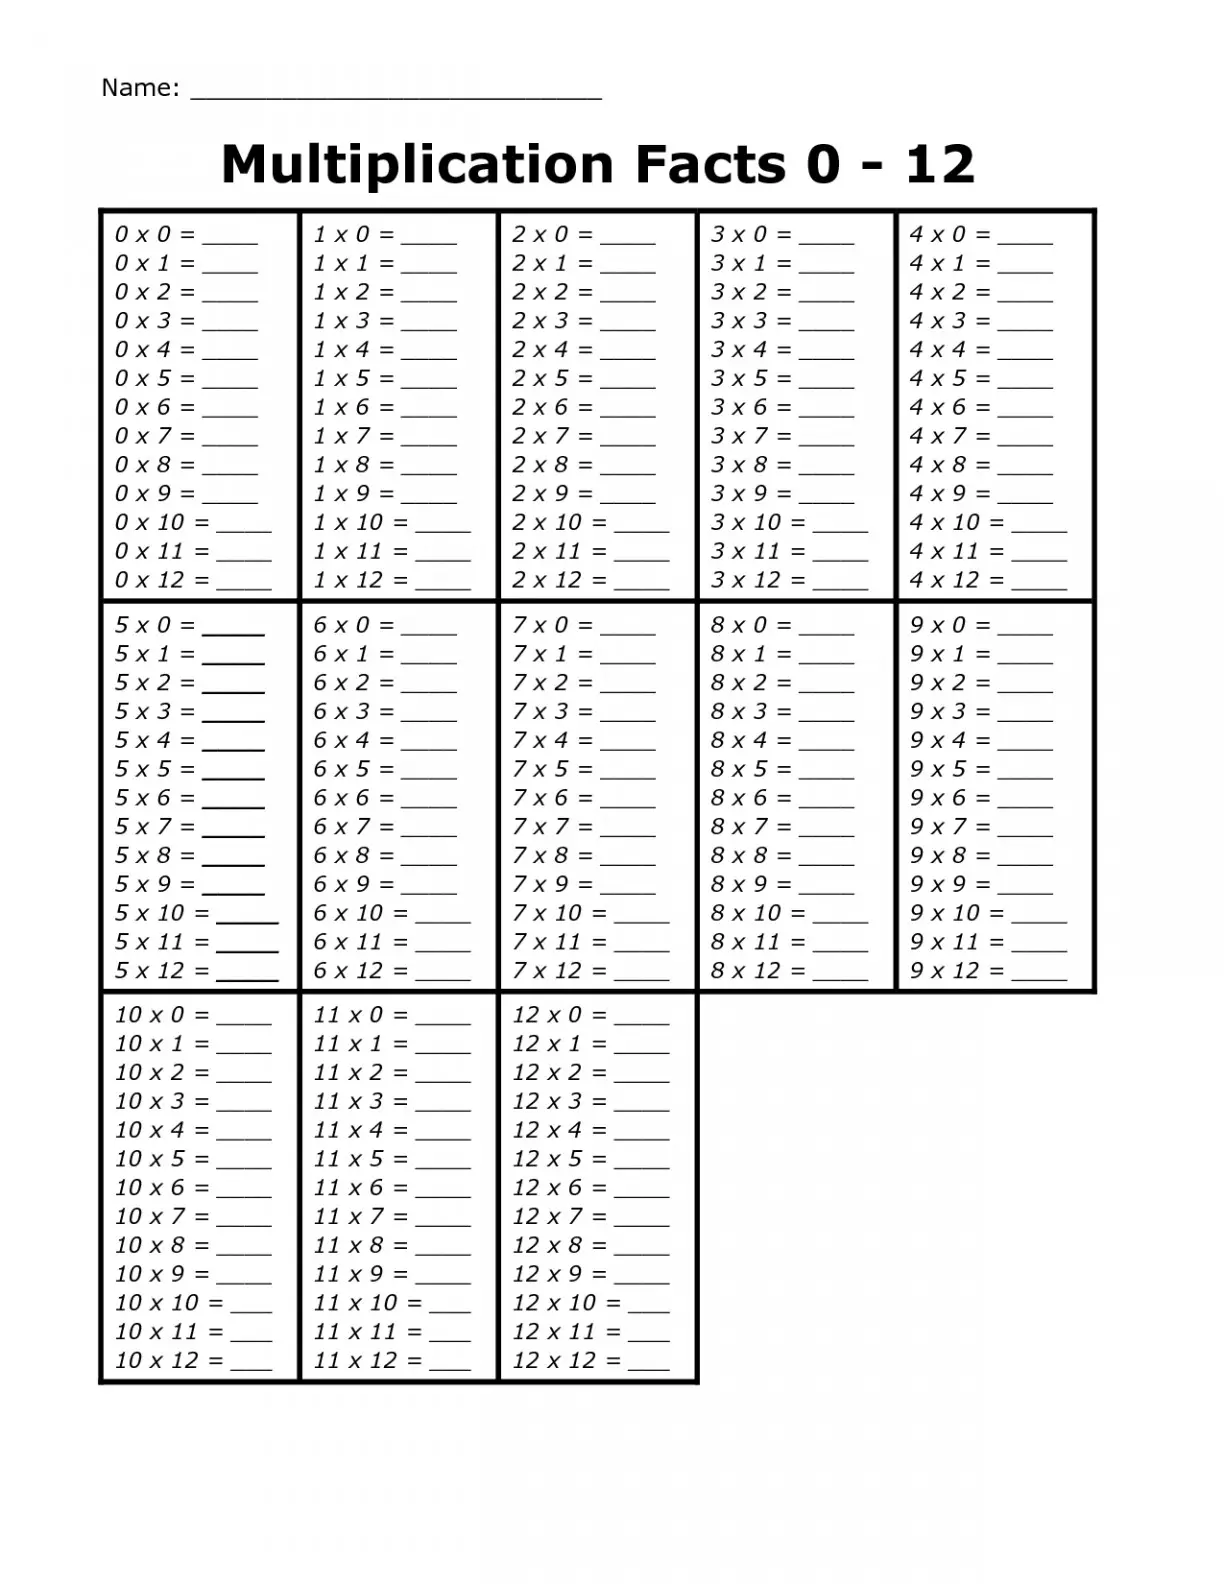 Blank Multiplication Chart